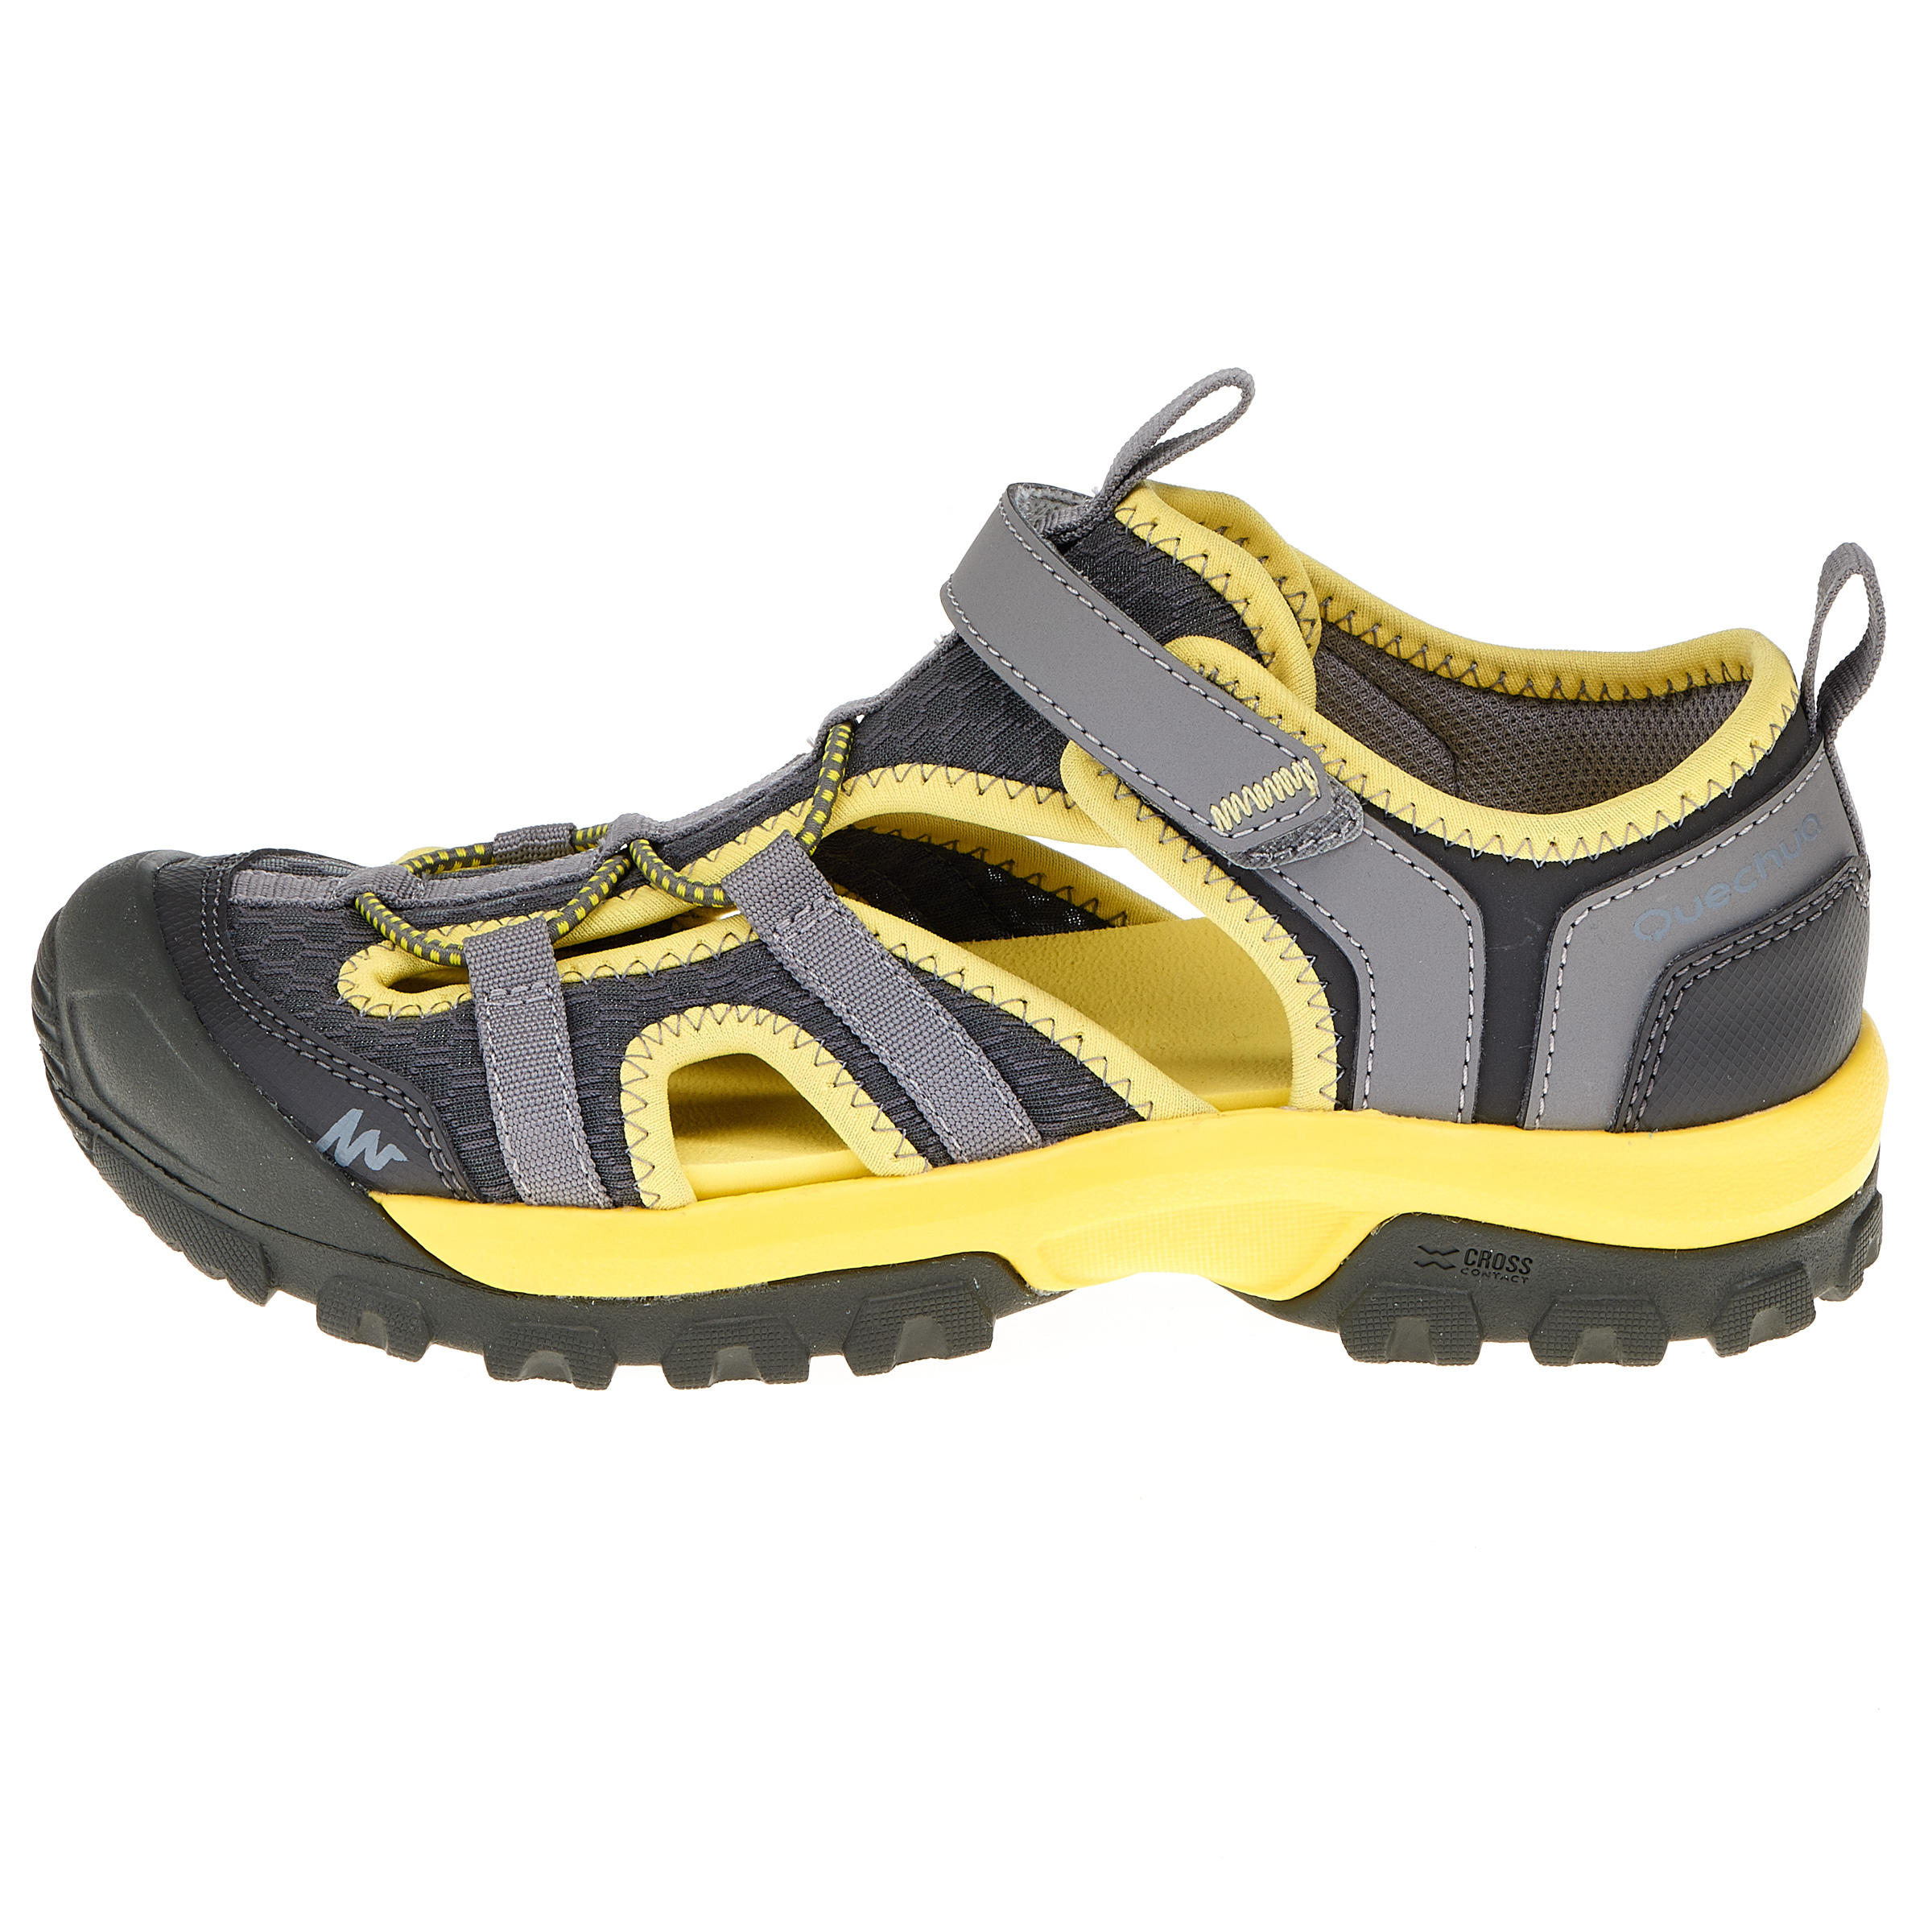 Hike 900 Child Hiking Sandals-Yellow 4/11